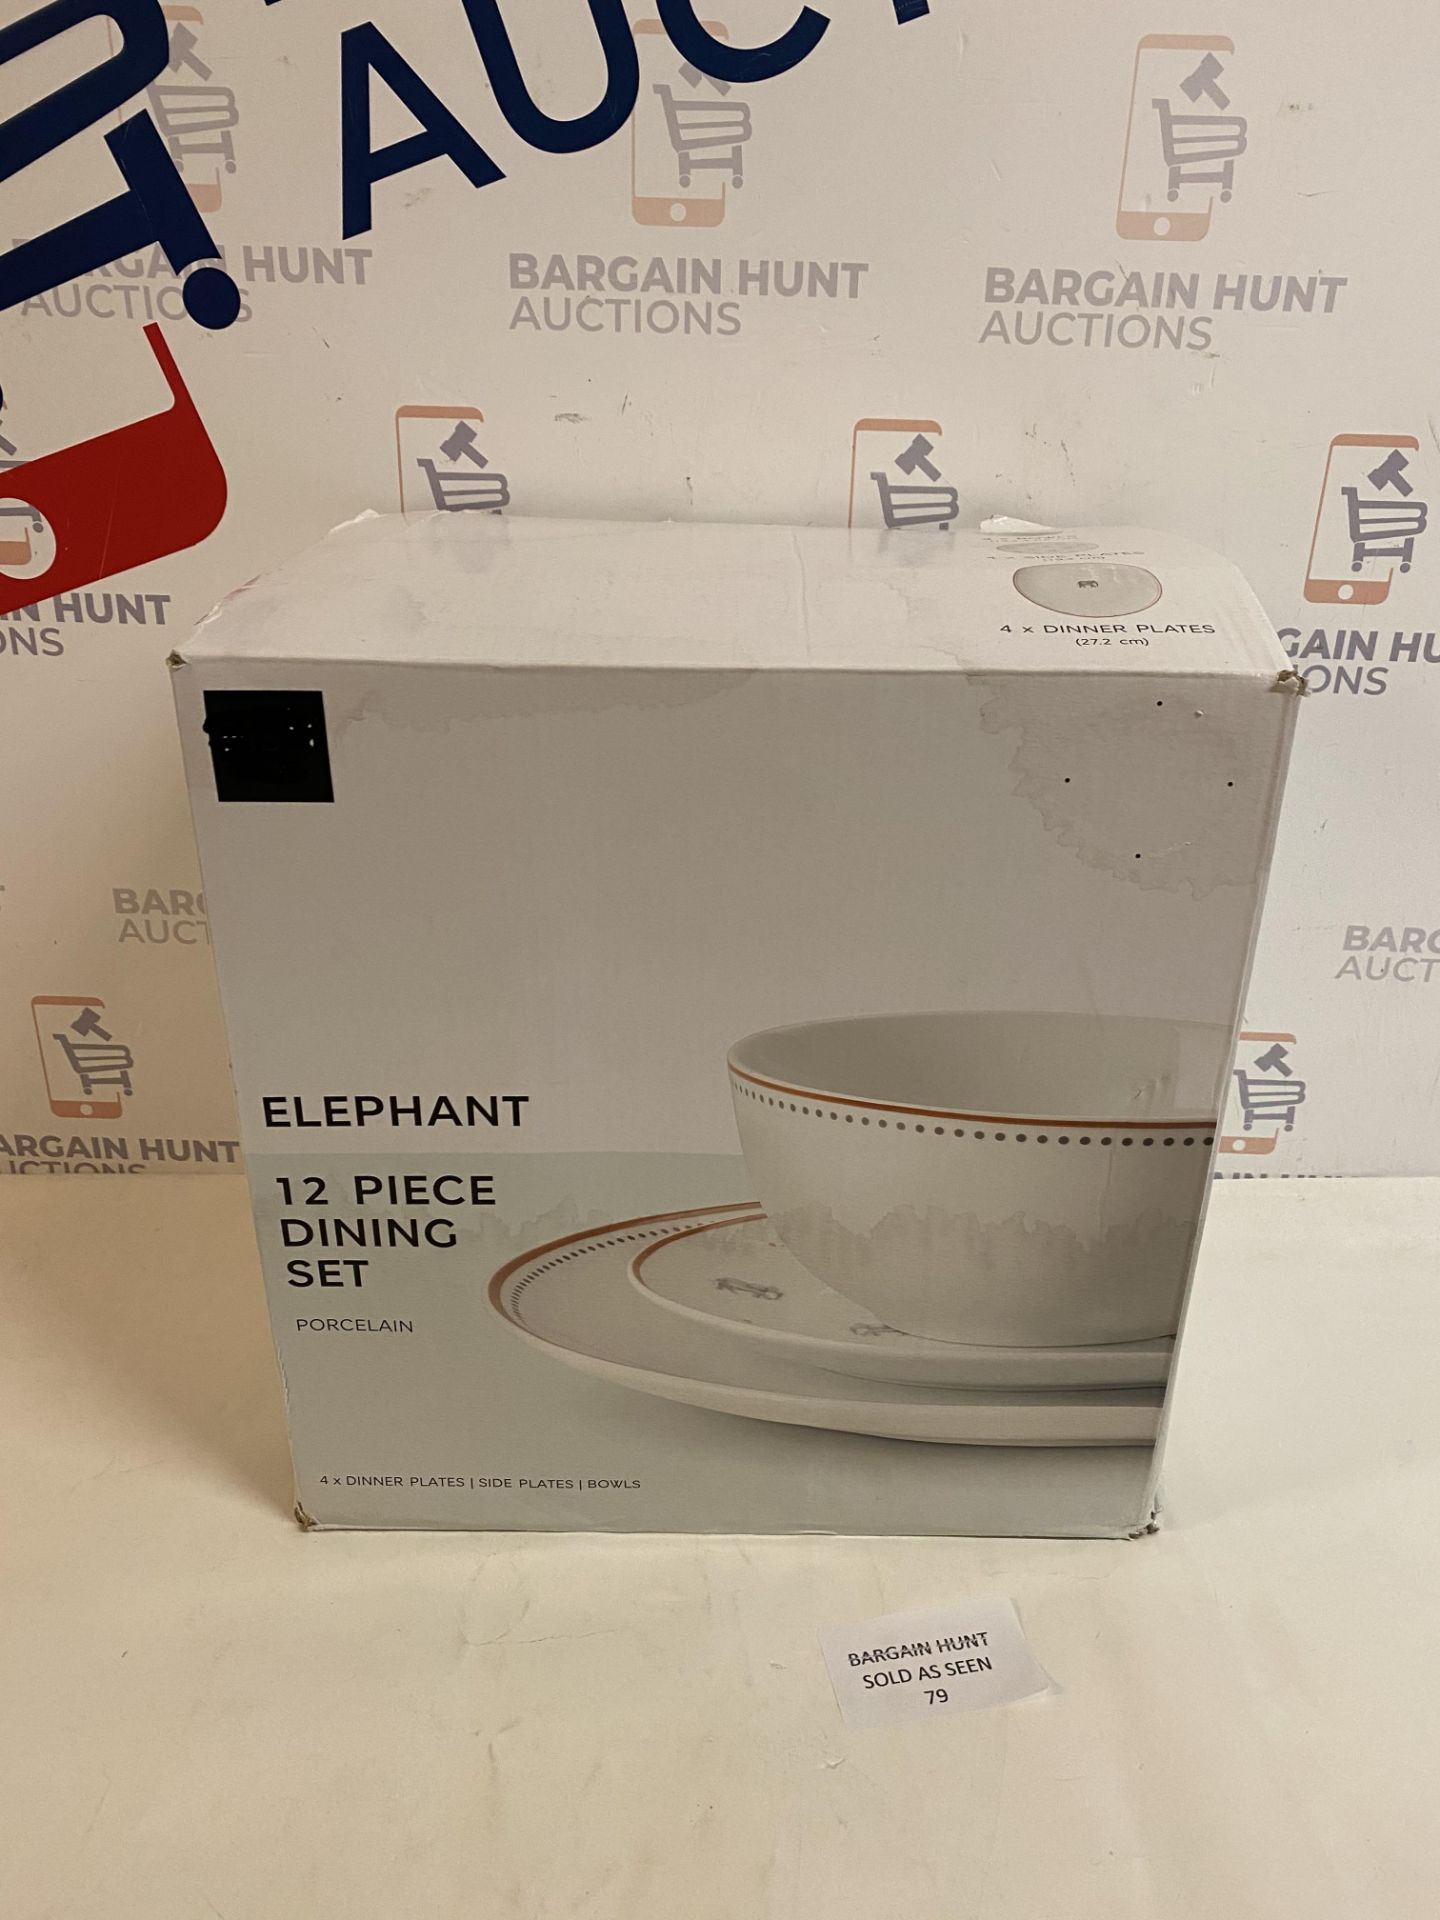 Elephant 12 Piece Porcelain Dining Set